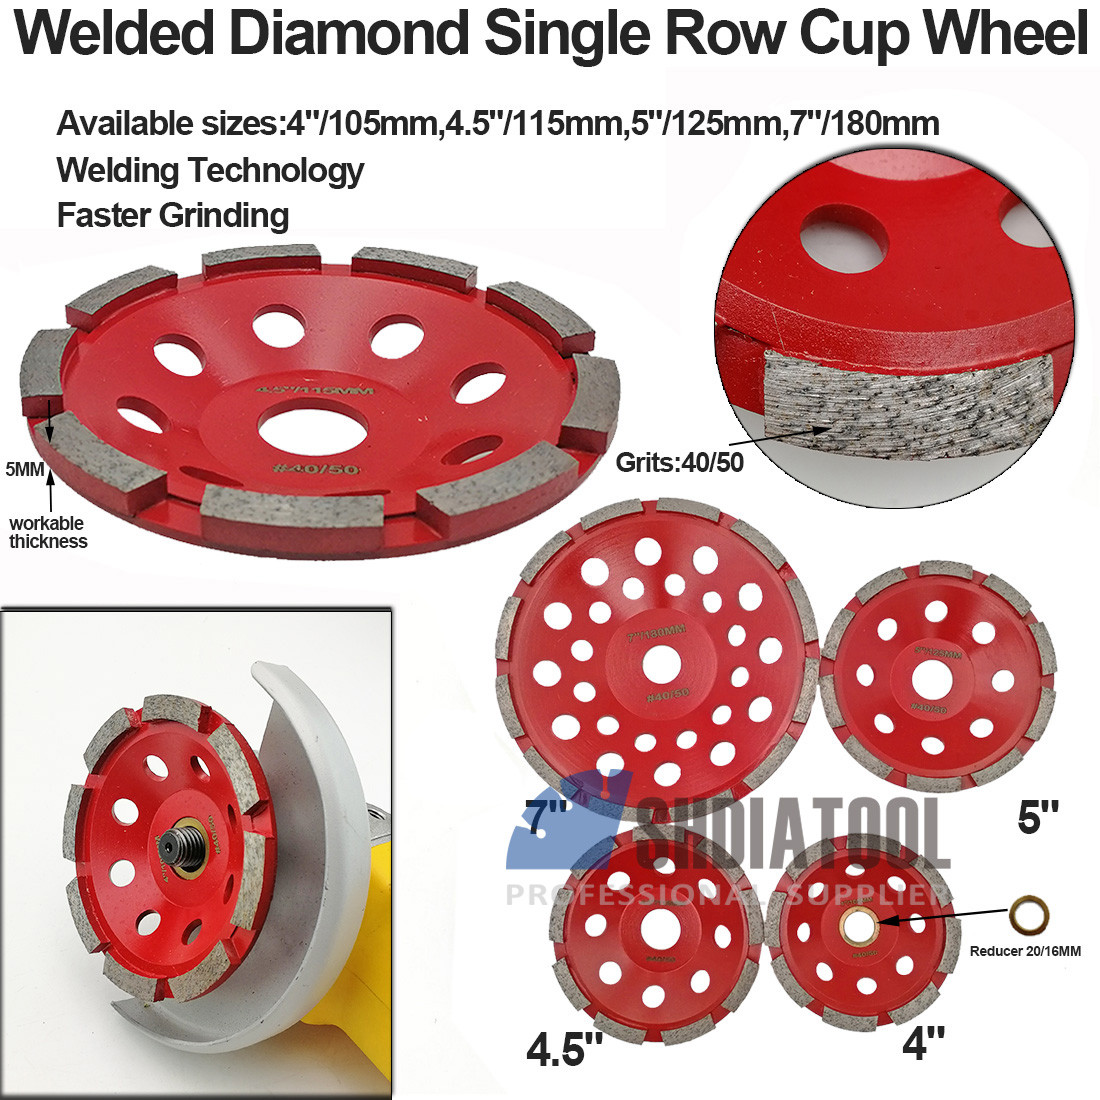 Welded Diamond Single Row Cup Wheel